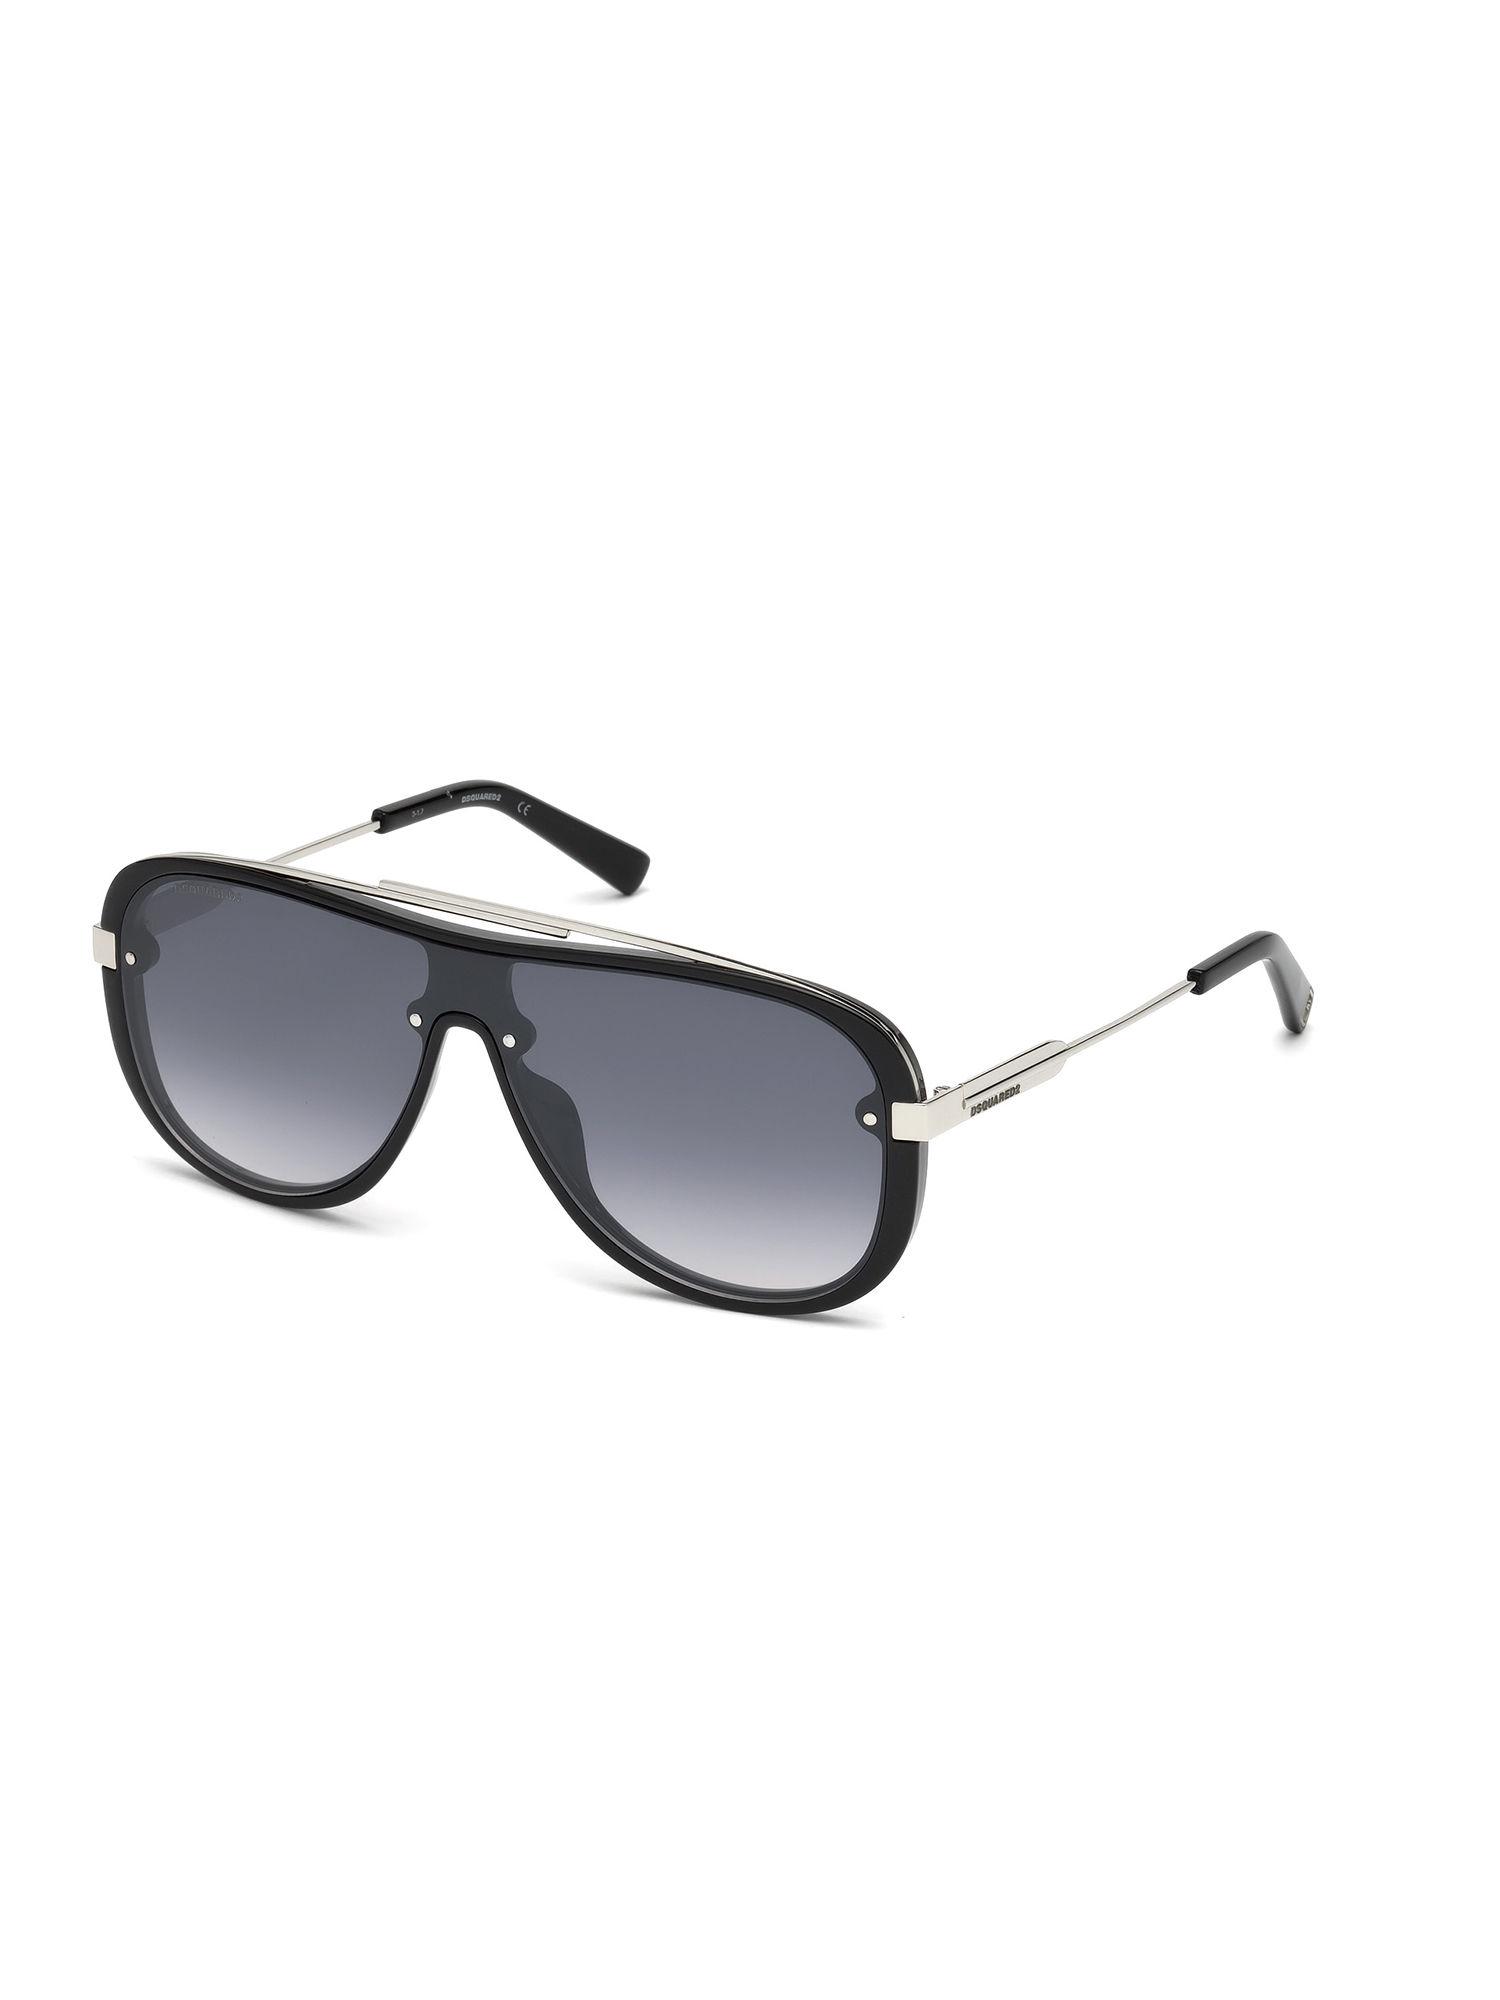 black metal sunglasses dq0271 00 01c